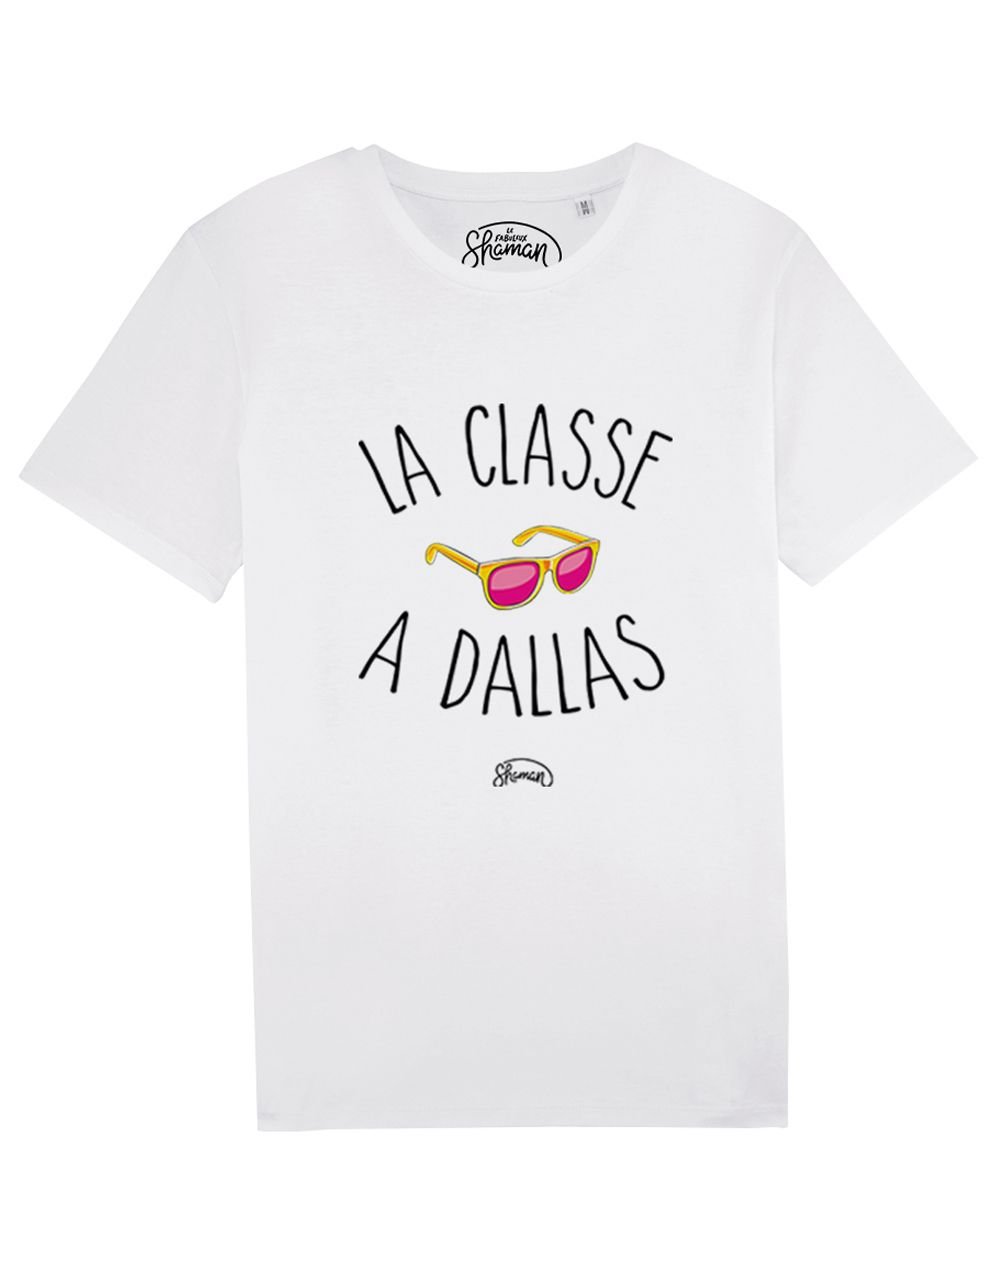 Tee-shirt "La classe à dallas"